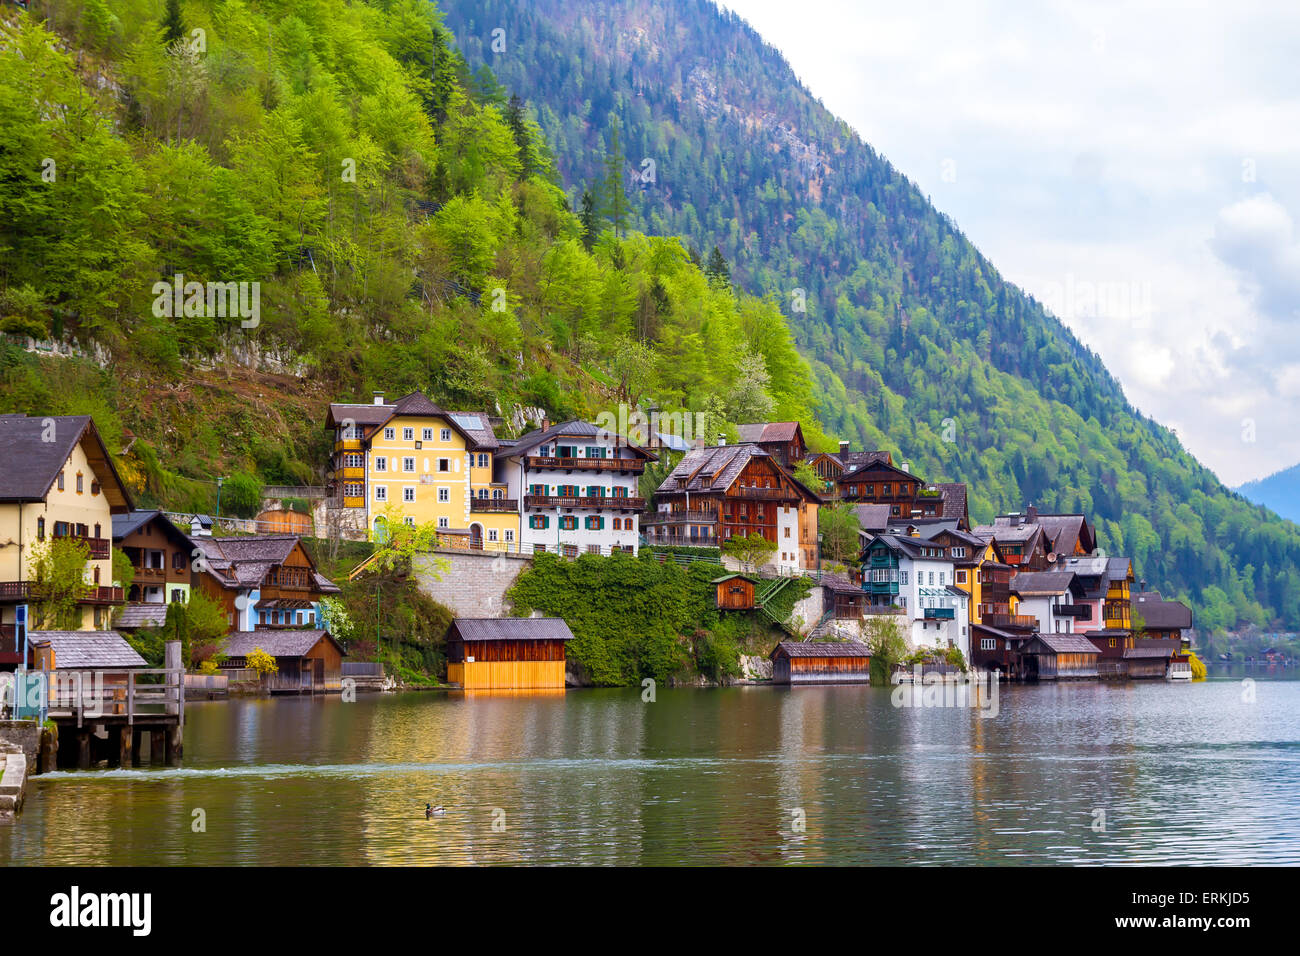 Hallstatt, village in the mountains in Austria Stock Photo